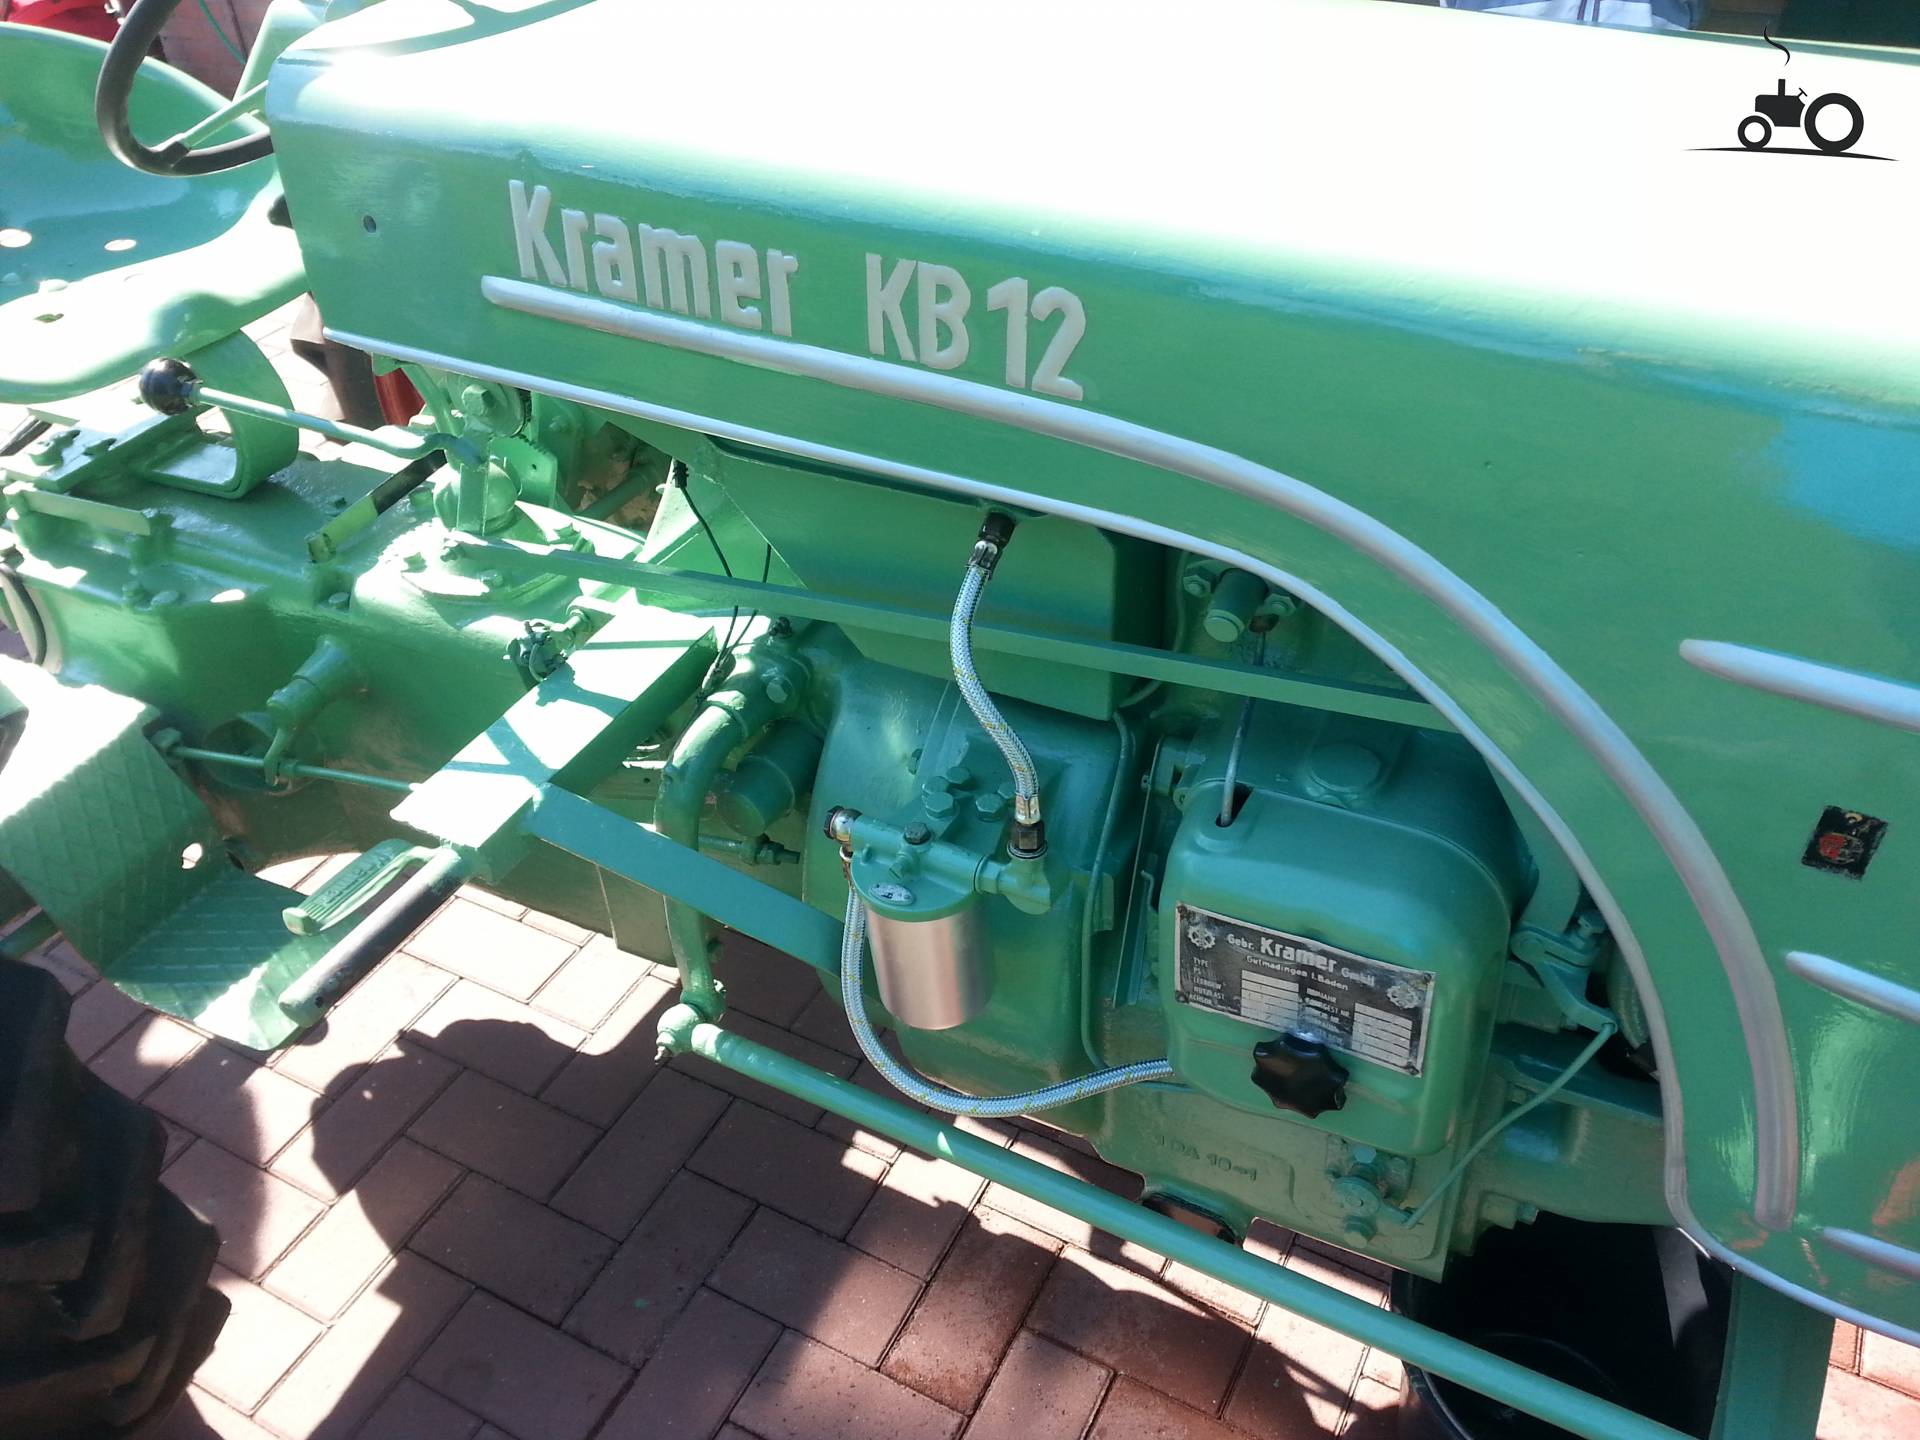 Kramer KB 12